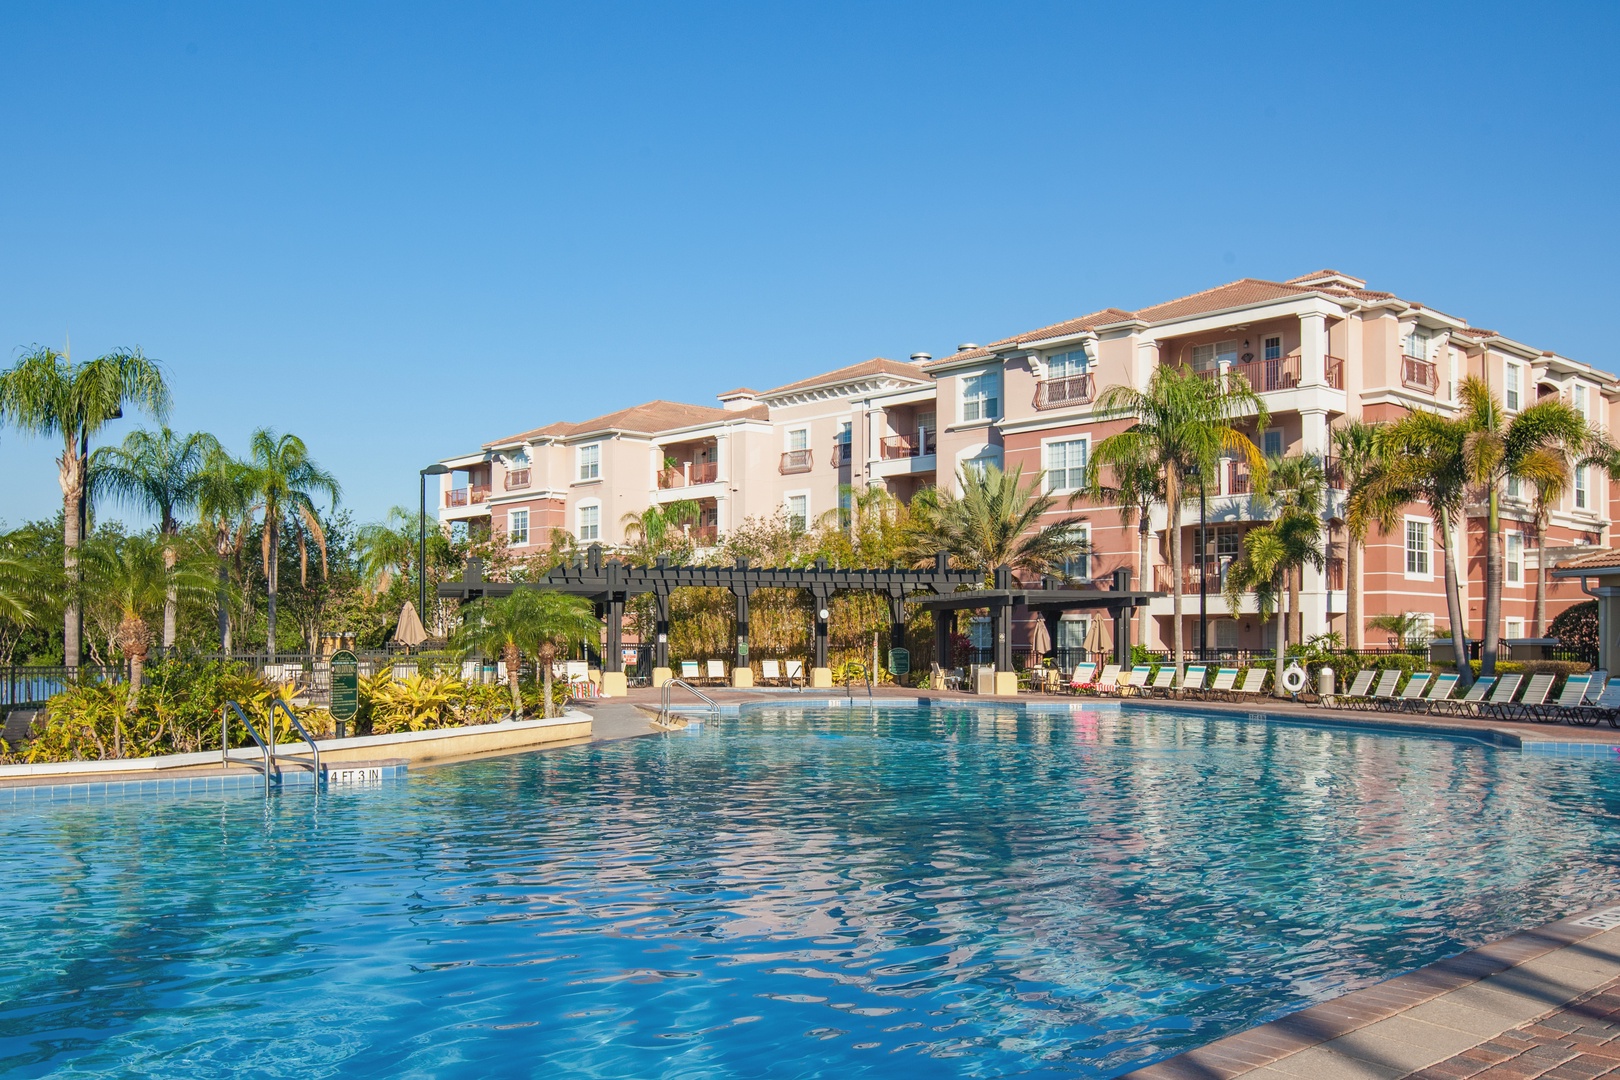 Club House Pool - Vista Cay Resort Direct